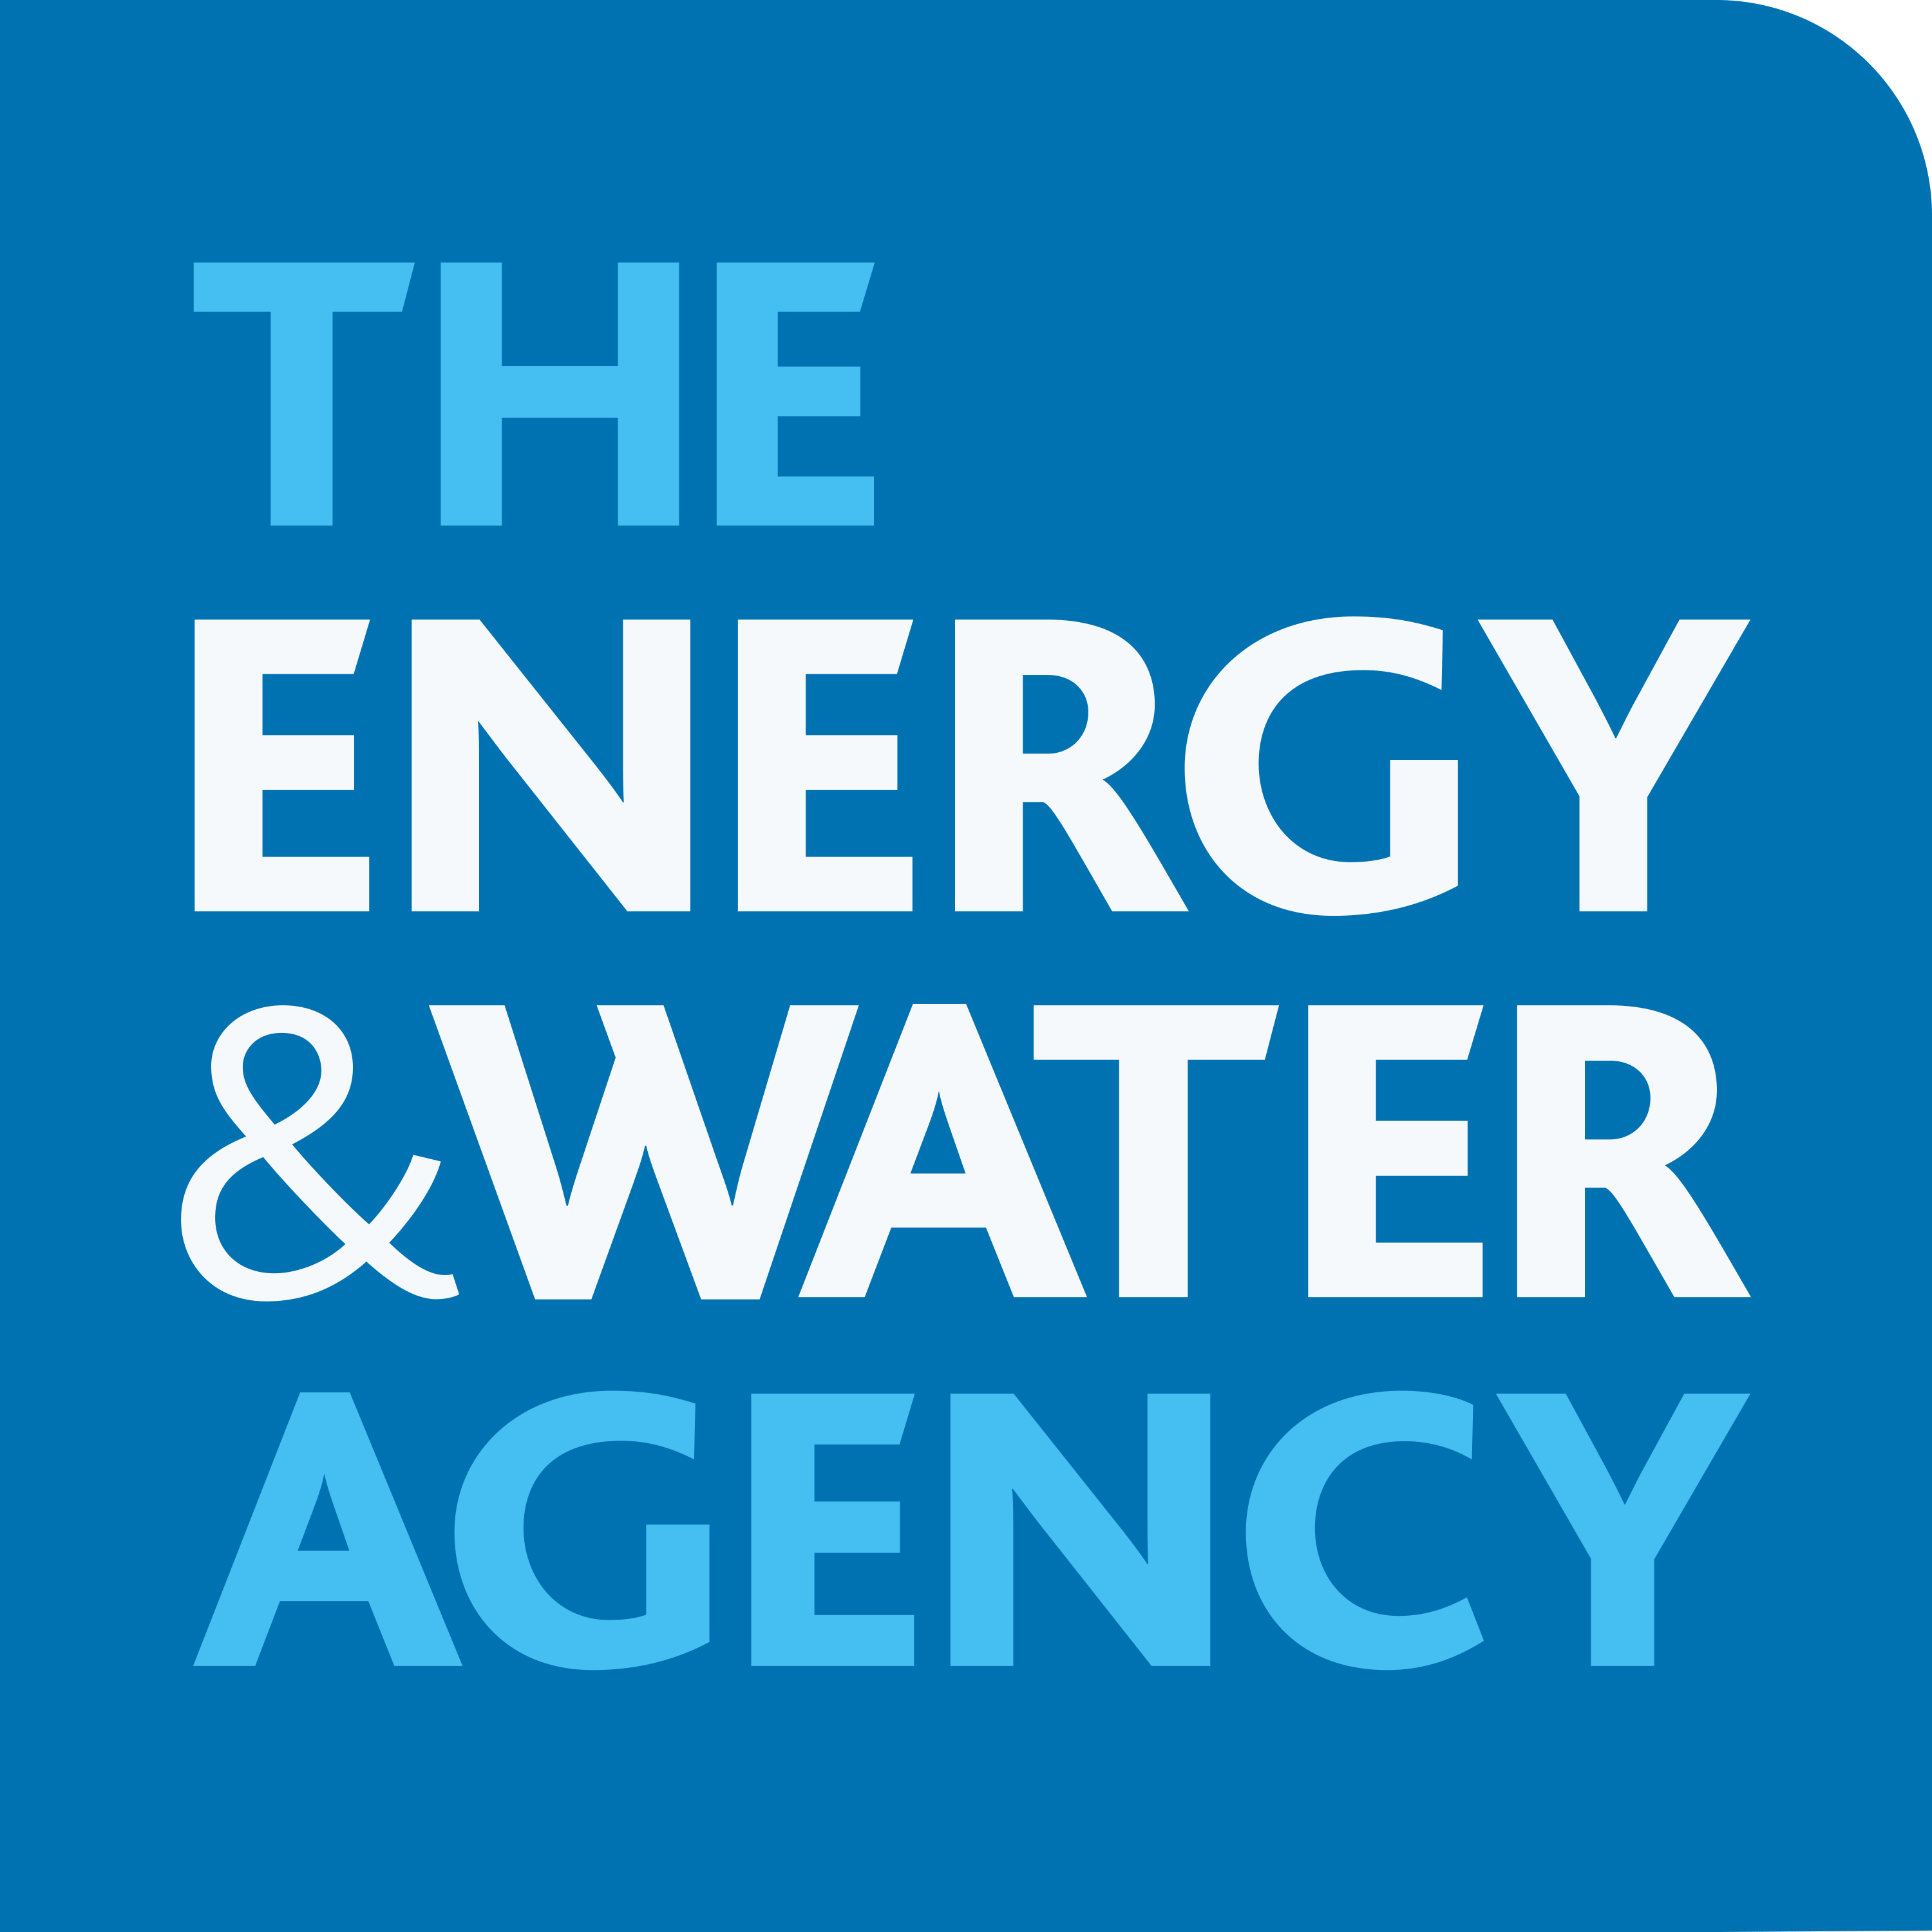 Energy and Water Agency (EWA)
___
Partner